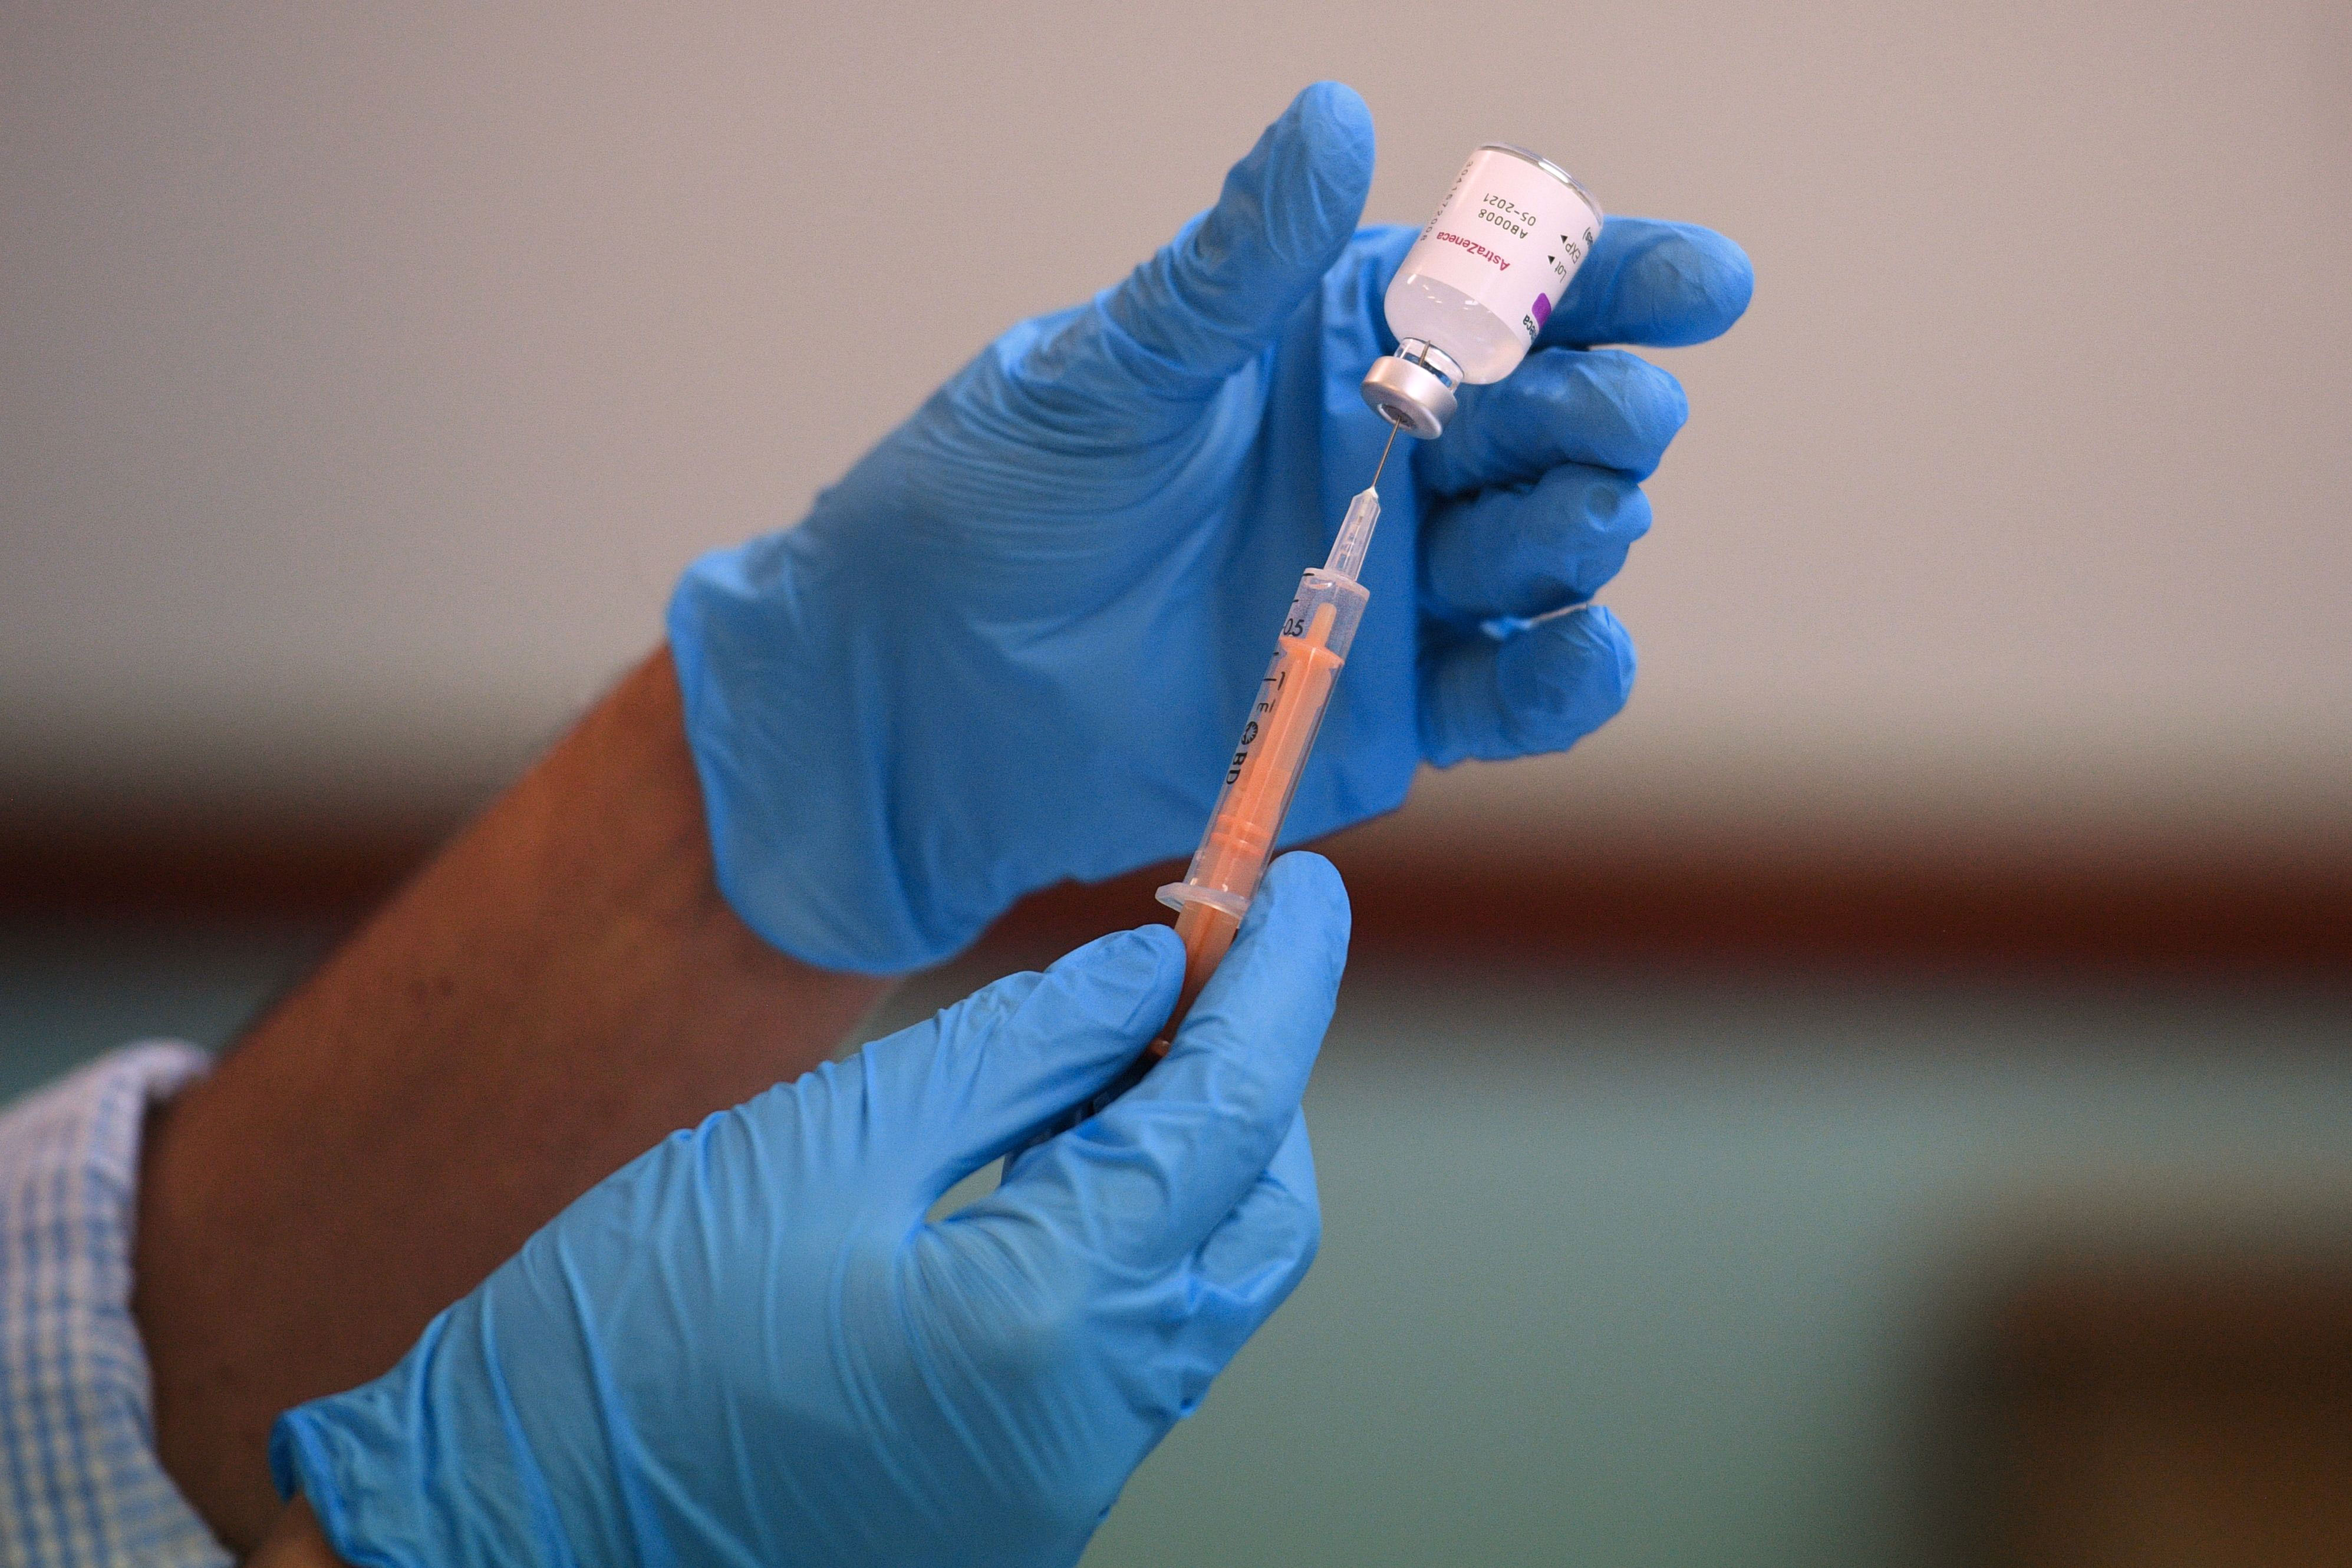 A pharmacist prepares a dose of the Oxford/AstraZeneca Covid-19 vaccine in Birmingham, England, on February 4.